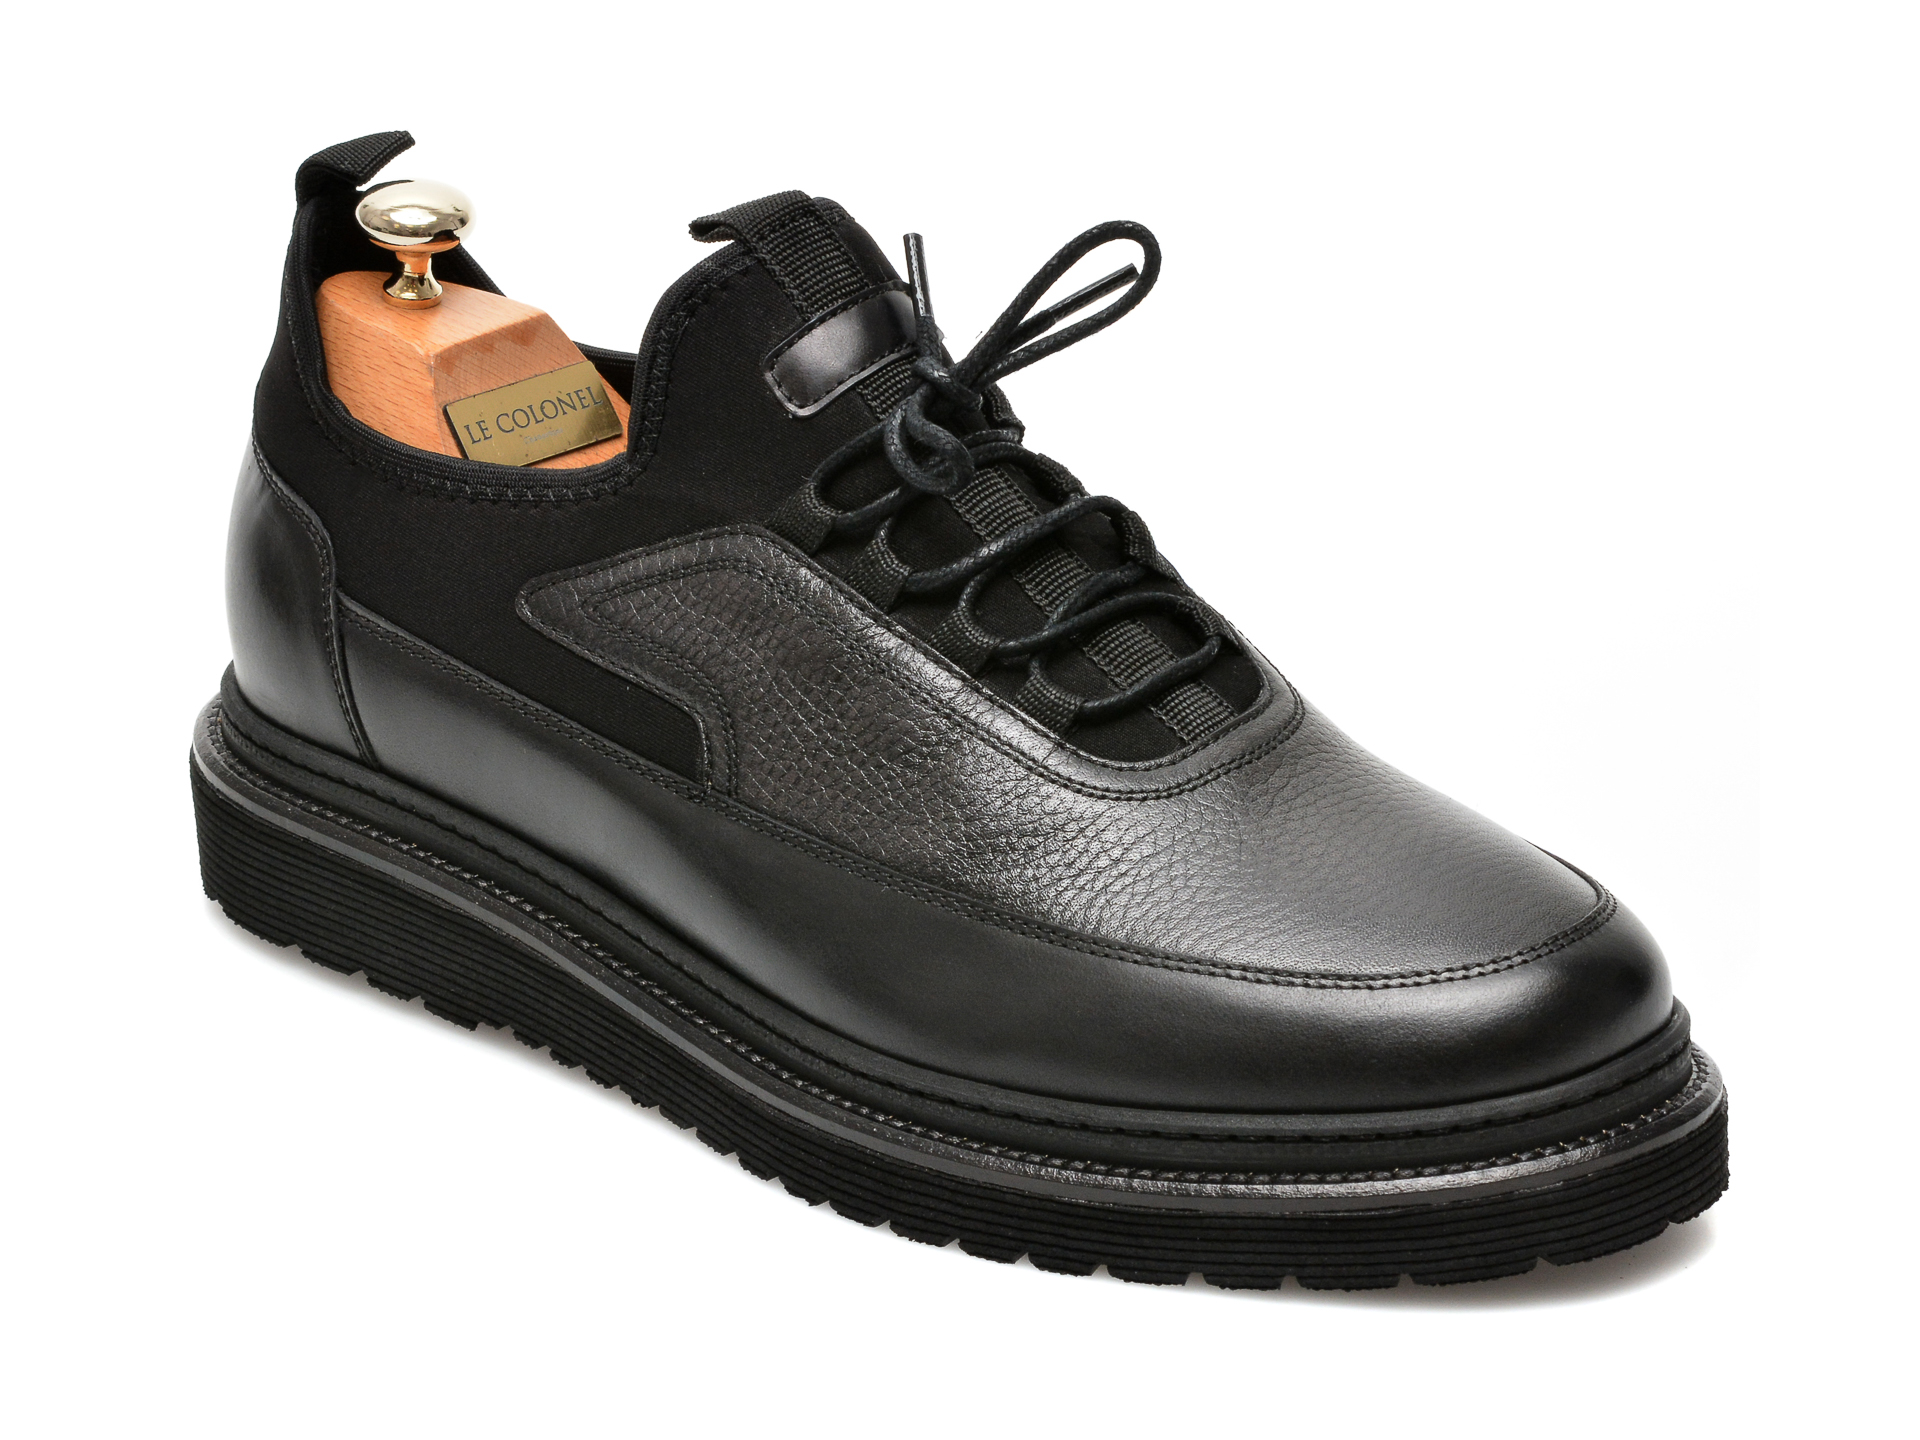 Pantofi LE COLONEL negri, 64816, din material textil si piele naturala Le Colonel Le Colonel